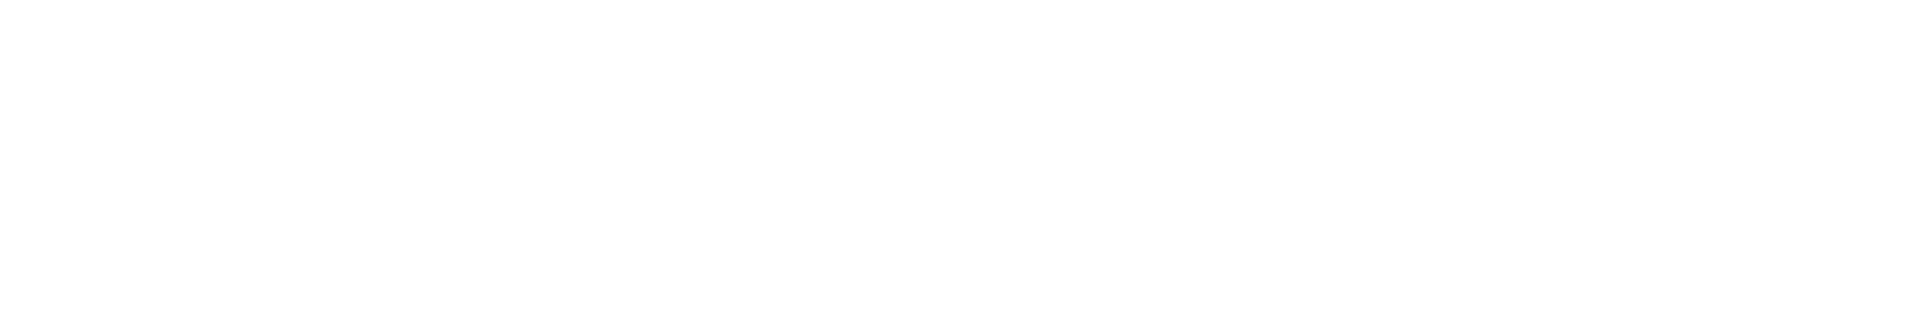 TECTRA Ltd logo